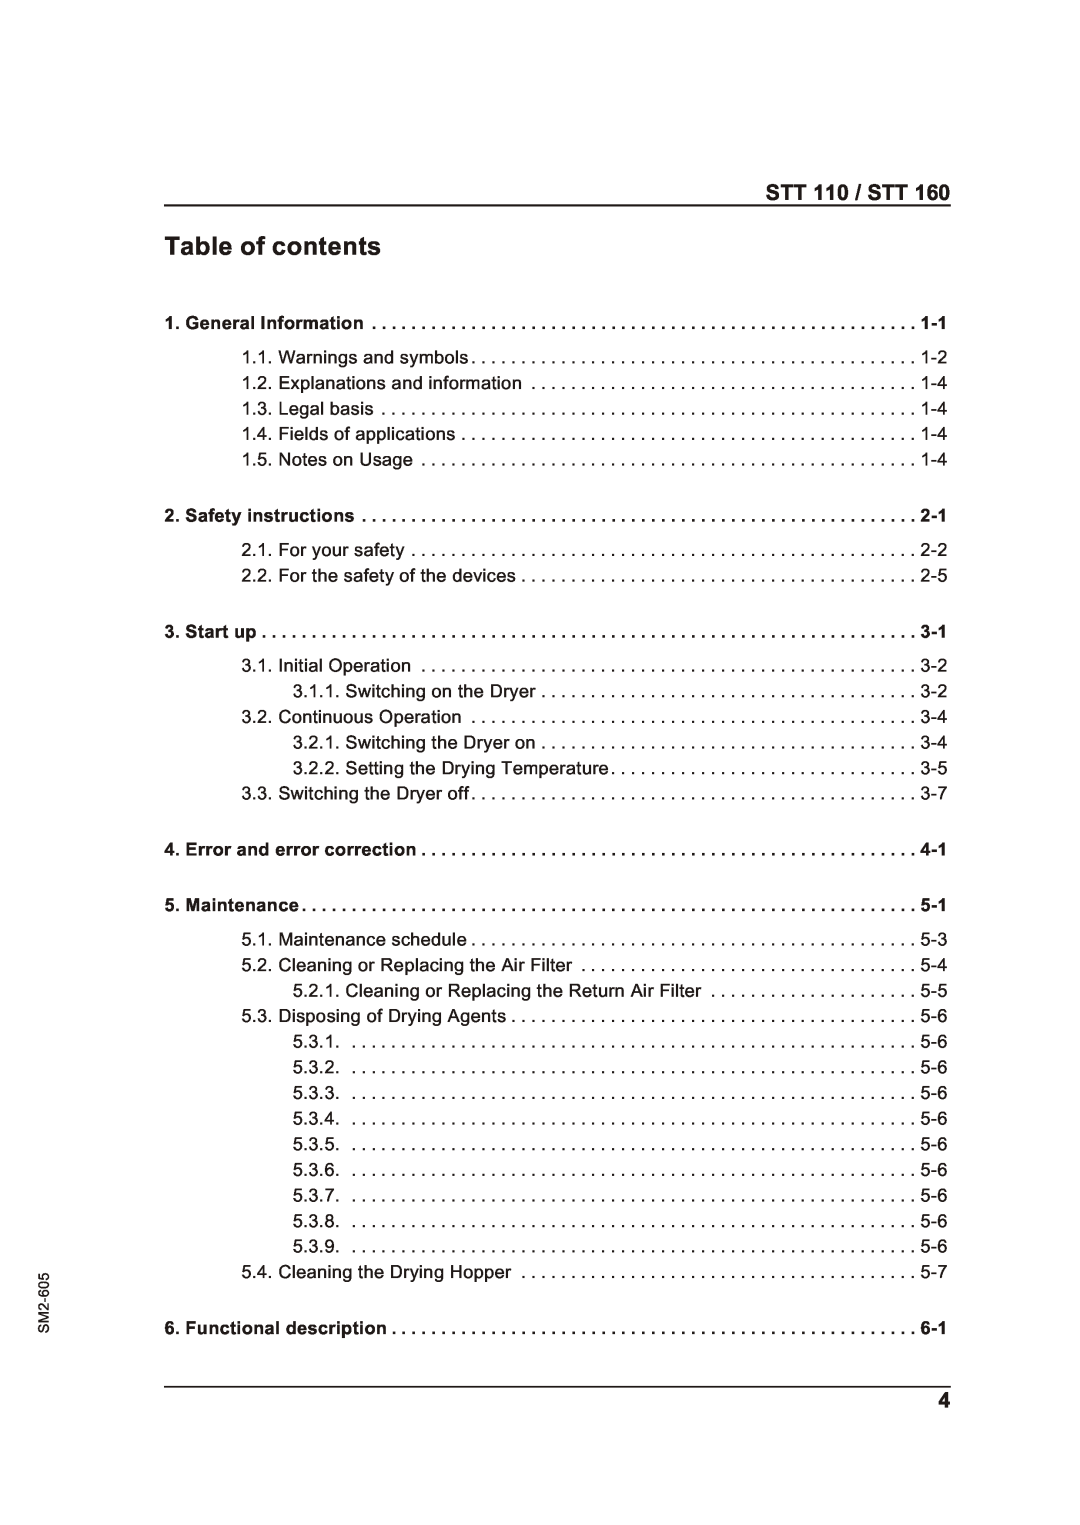 Sterling STT 160 manual Table of contents, STT 110 / STT 